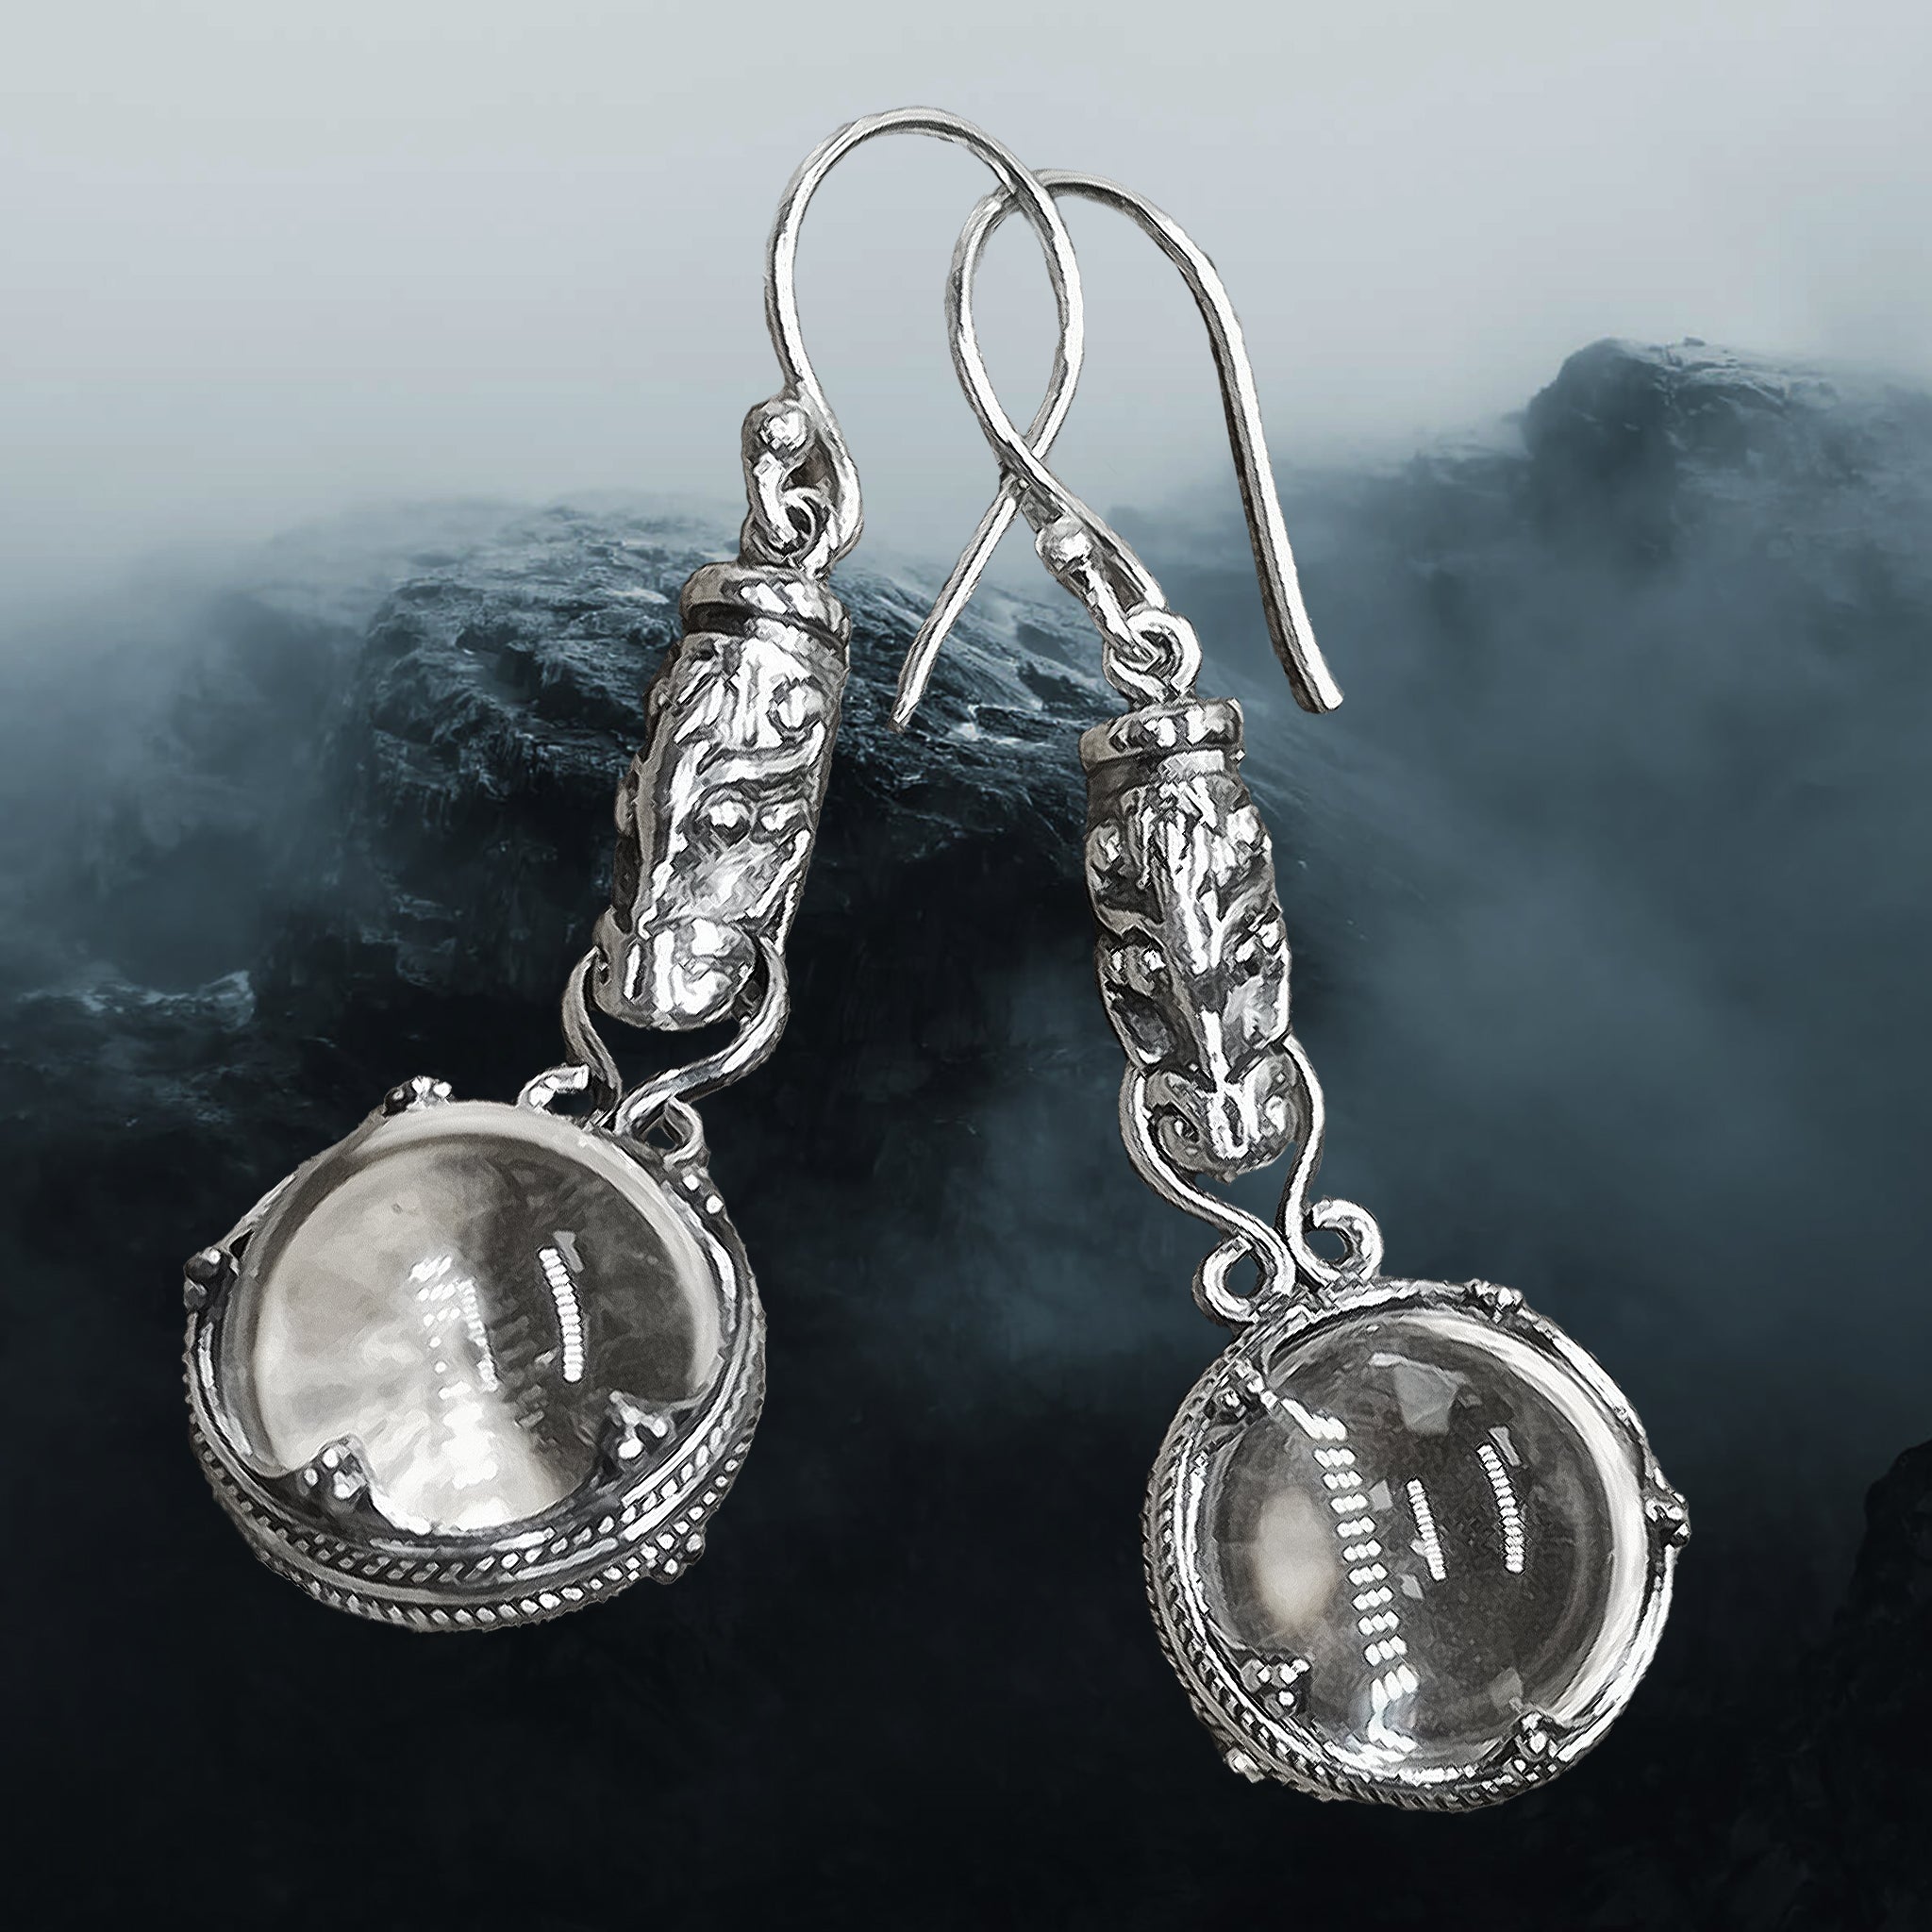 Silver Dragon Head Gotlandic Crystal Ball Earrings on Icy Ridge Background